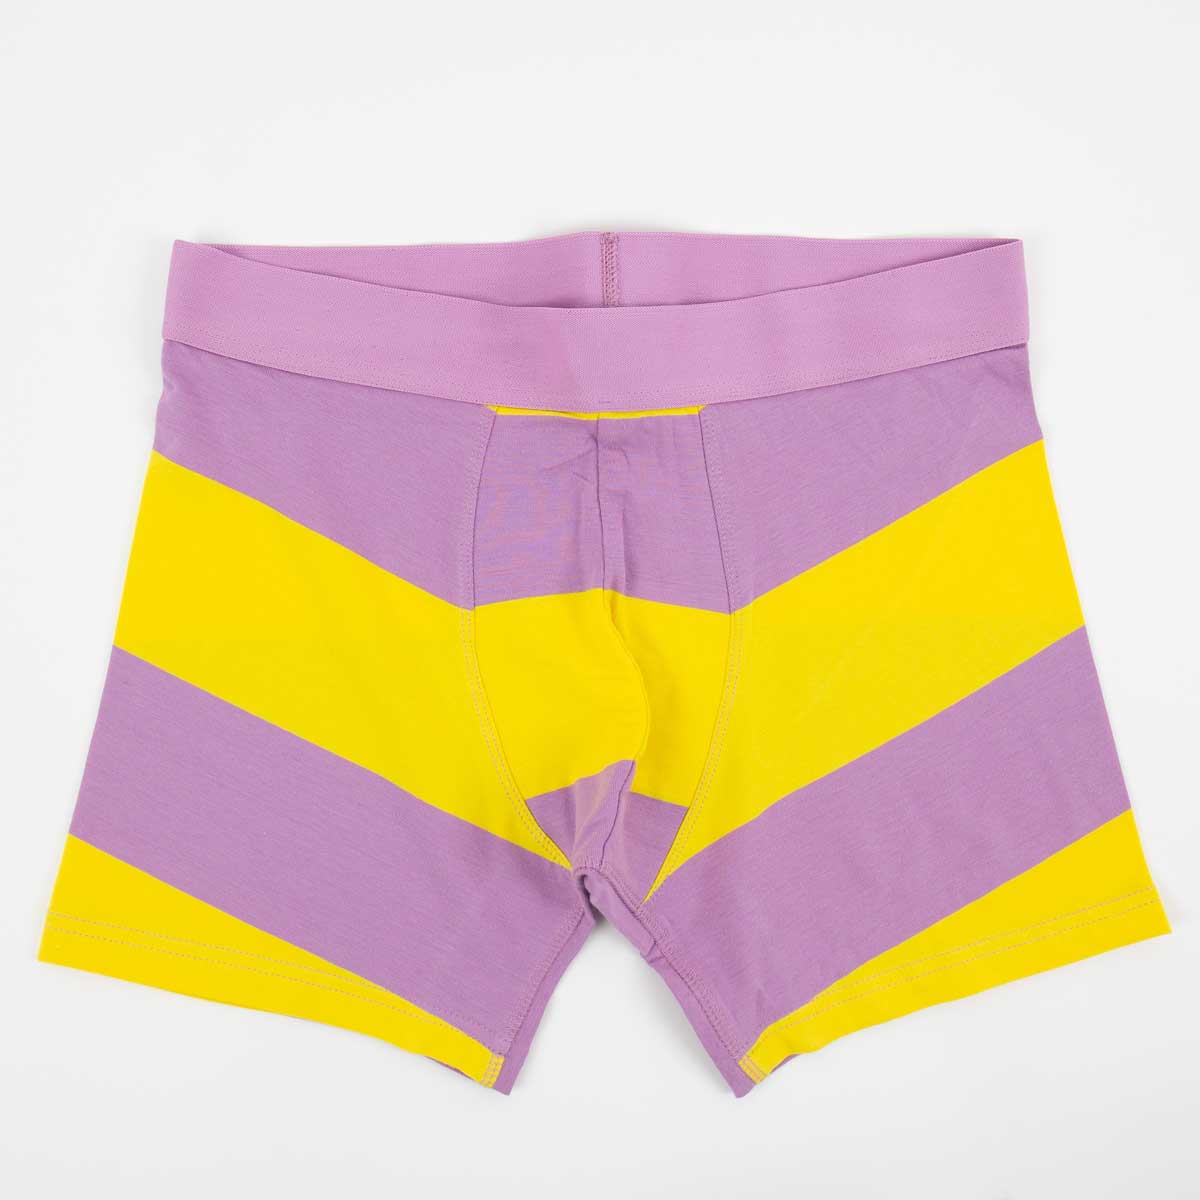 AWOC Boxers, yellow/lilac